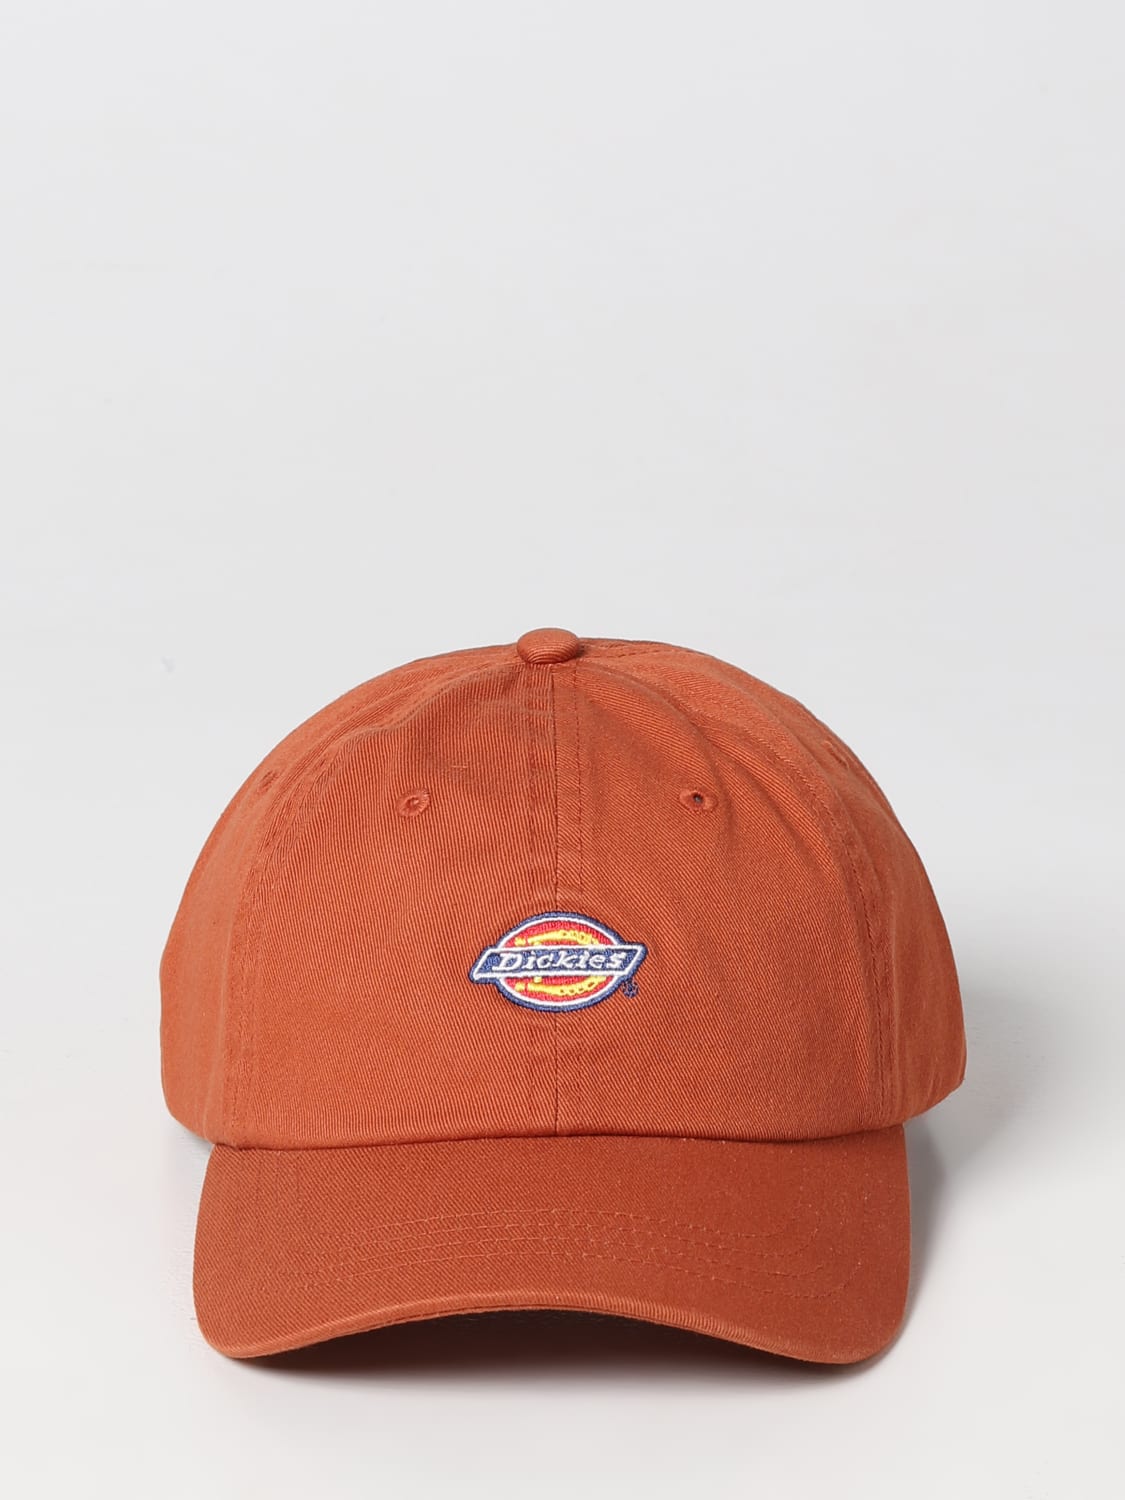 hat Brown DICKIES: man | - Dickies at DK0A4TKV online hat for